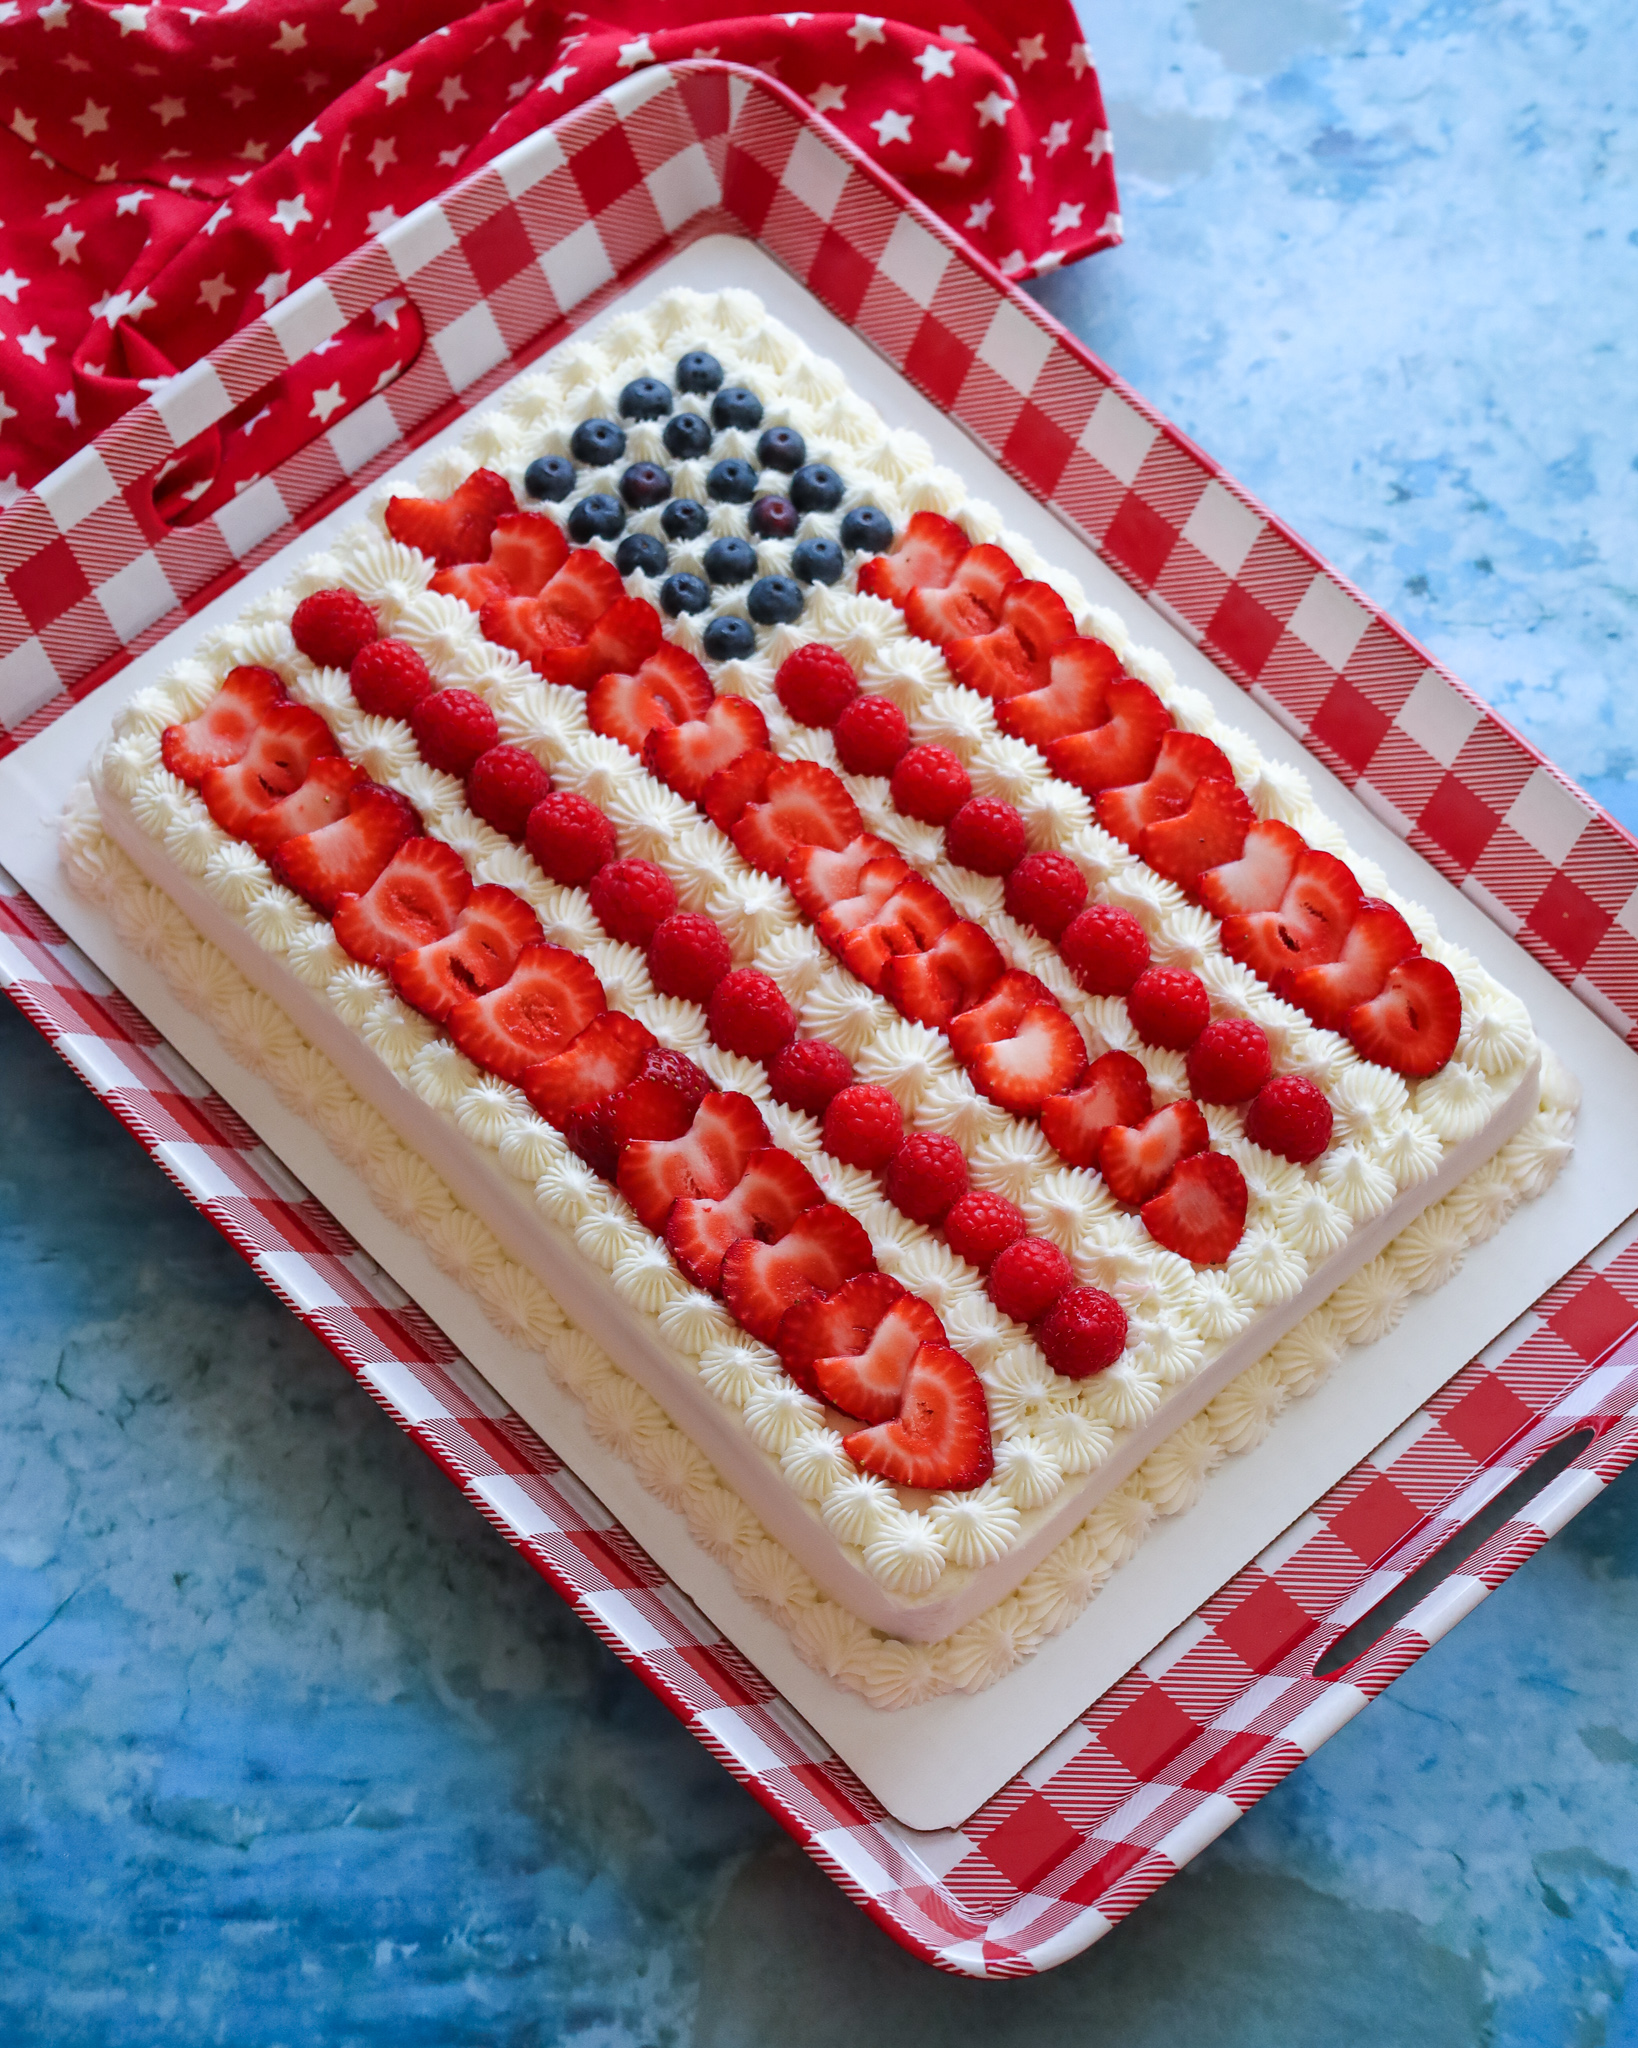 How to Make an American Flag Layer Cake • MidgetMomma